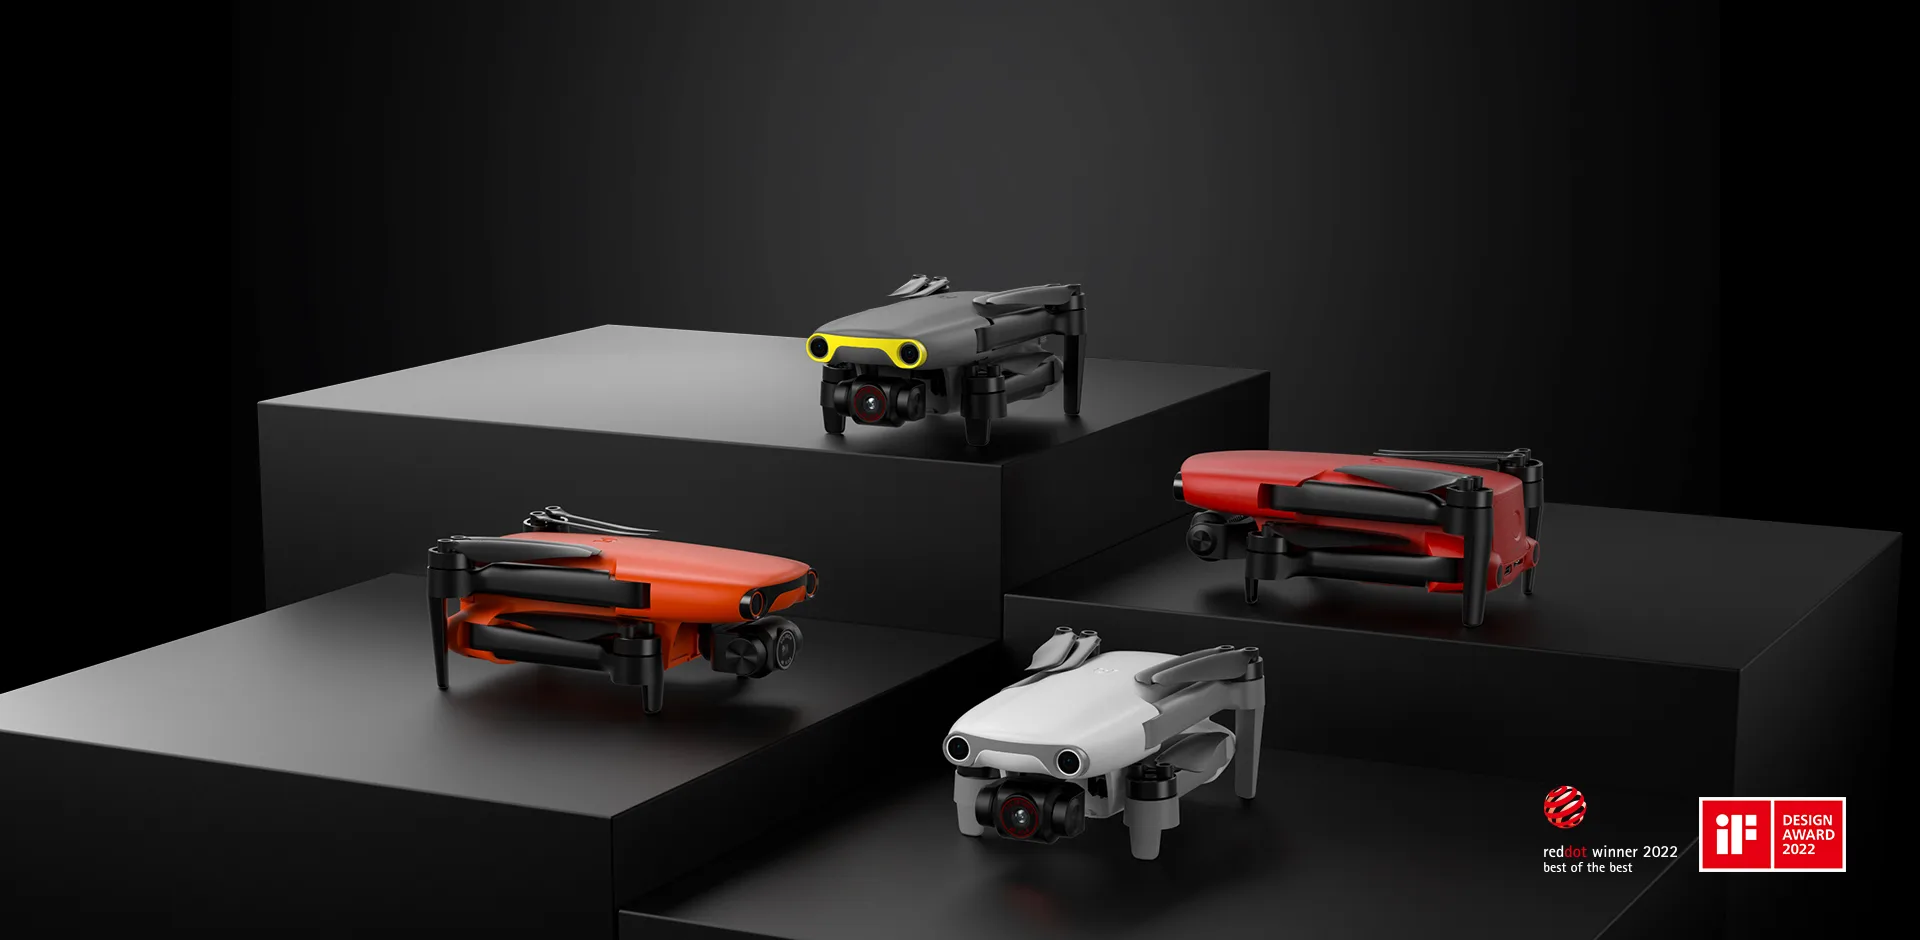 Autel Robotics orange drone application